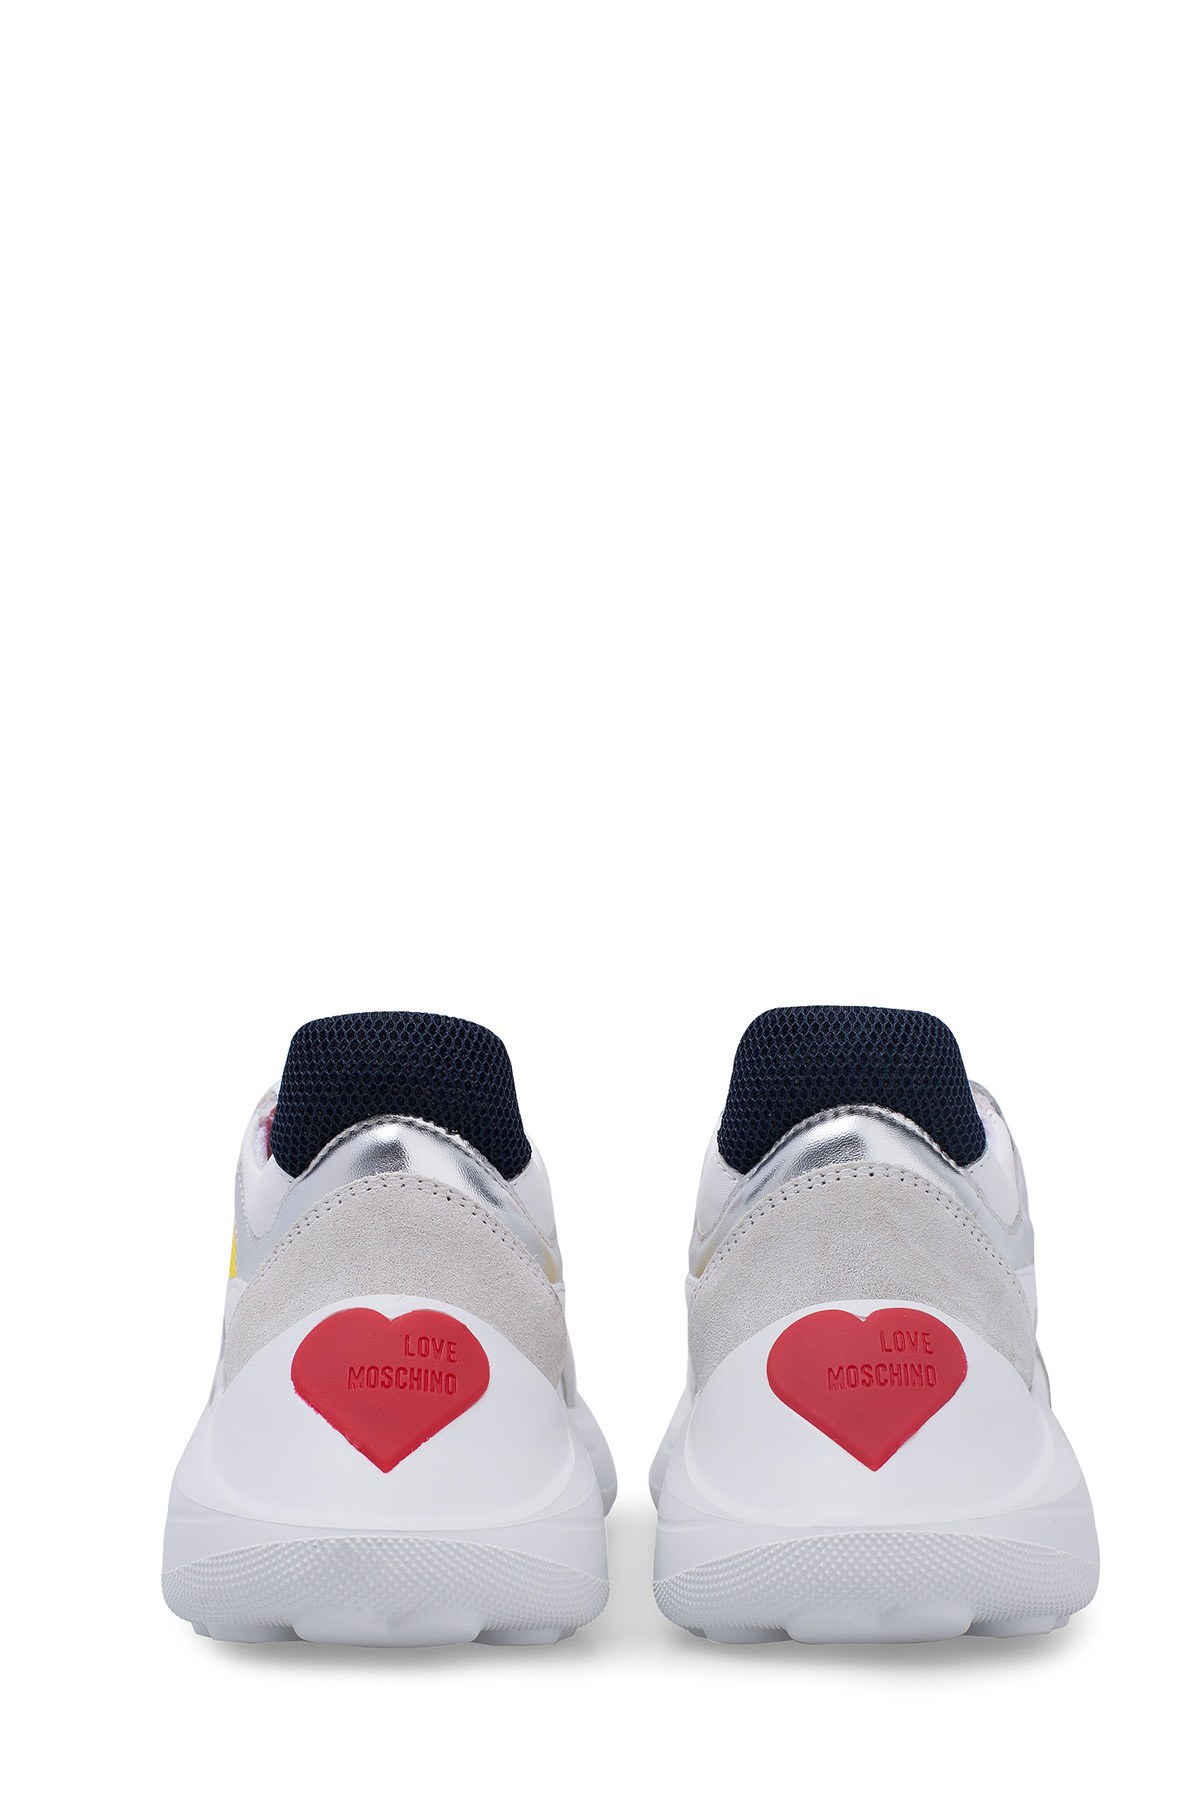 Love Moschino Kadın Ayakkabı JA15306G1A01A BEYAZ